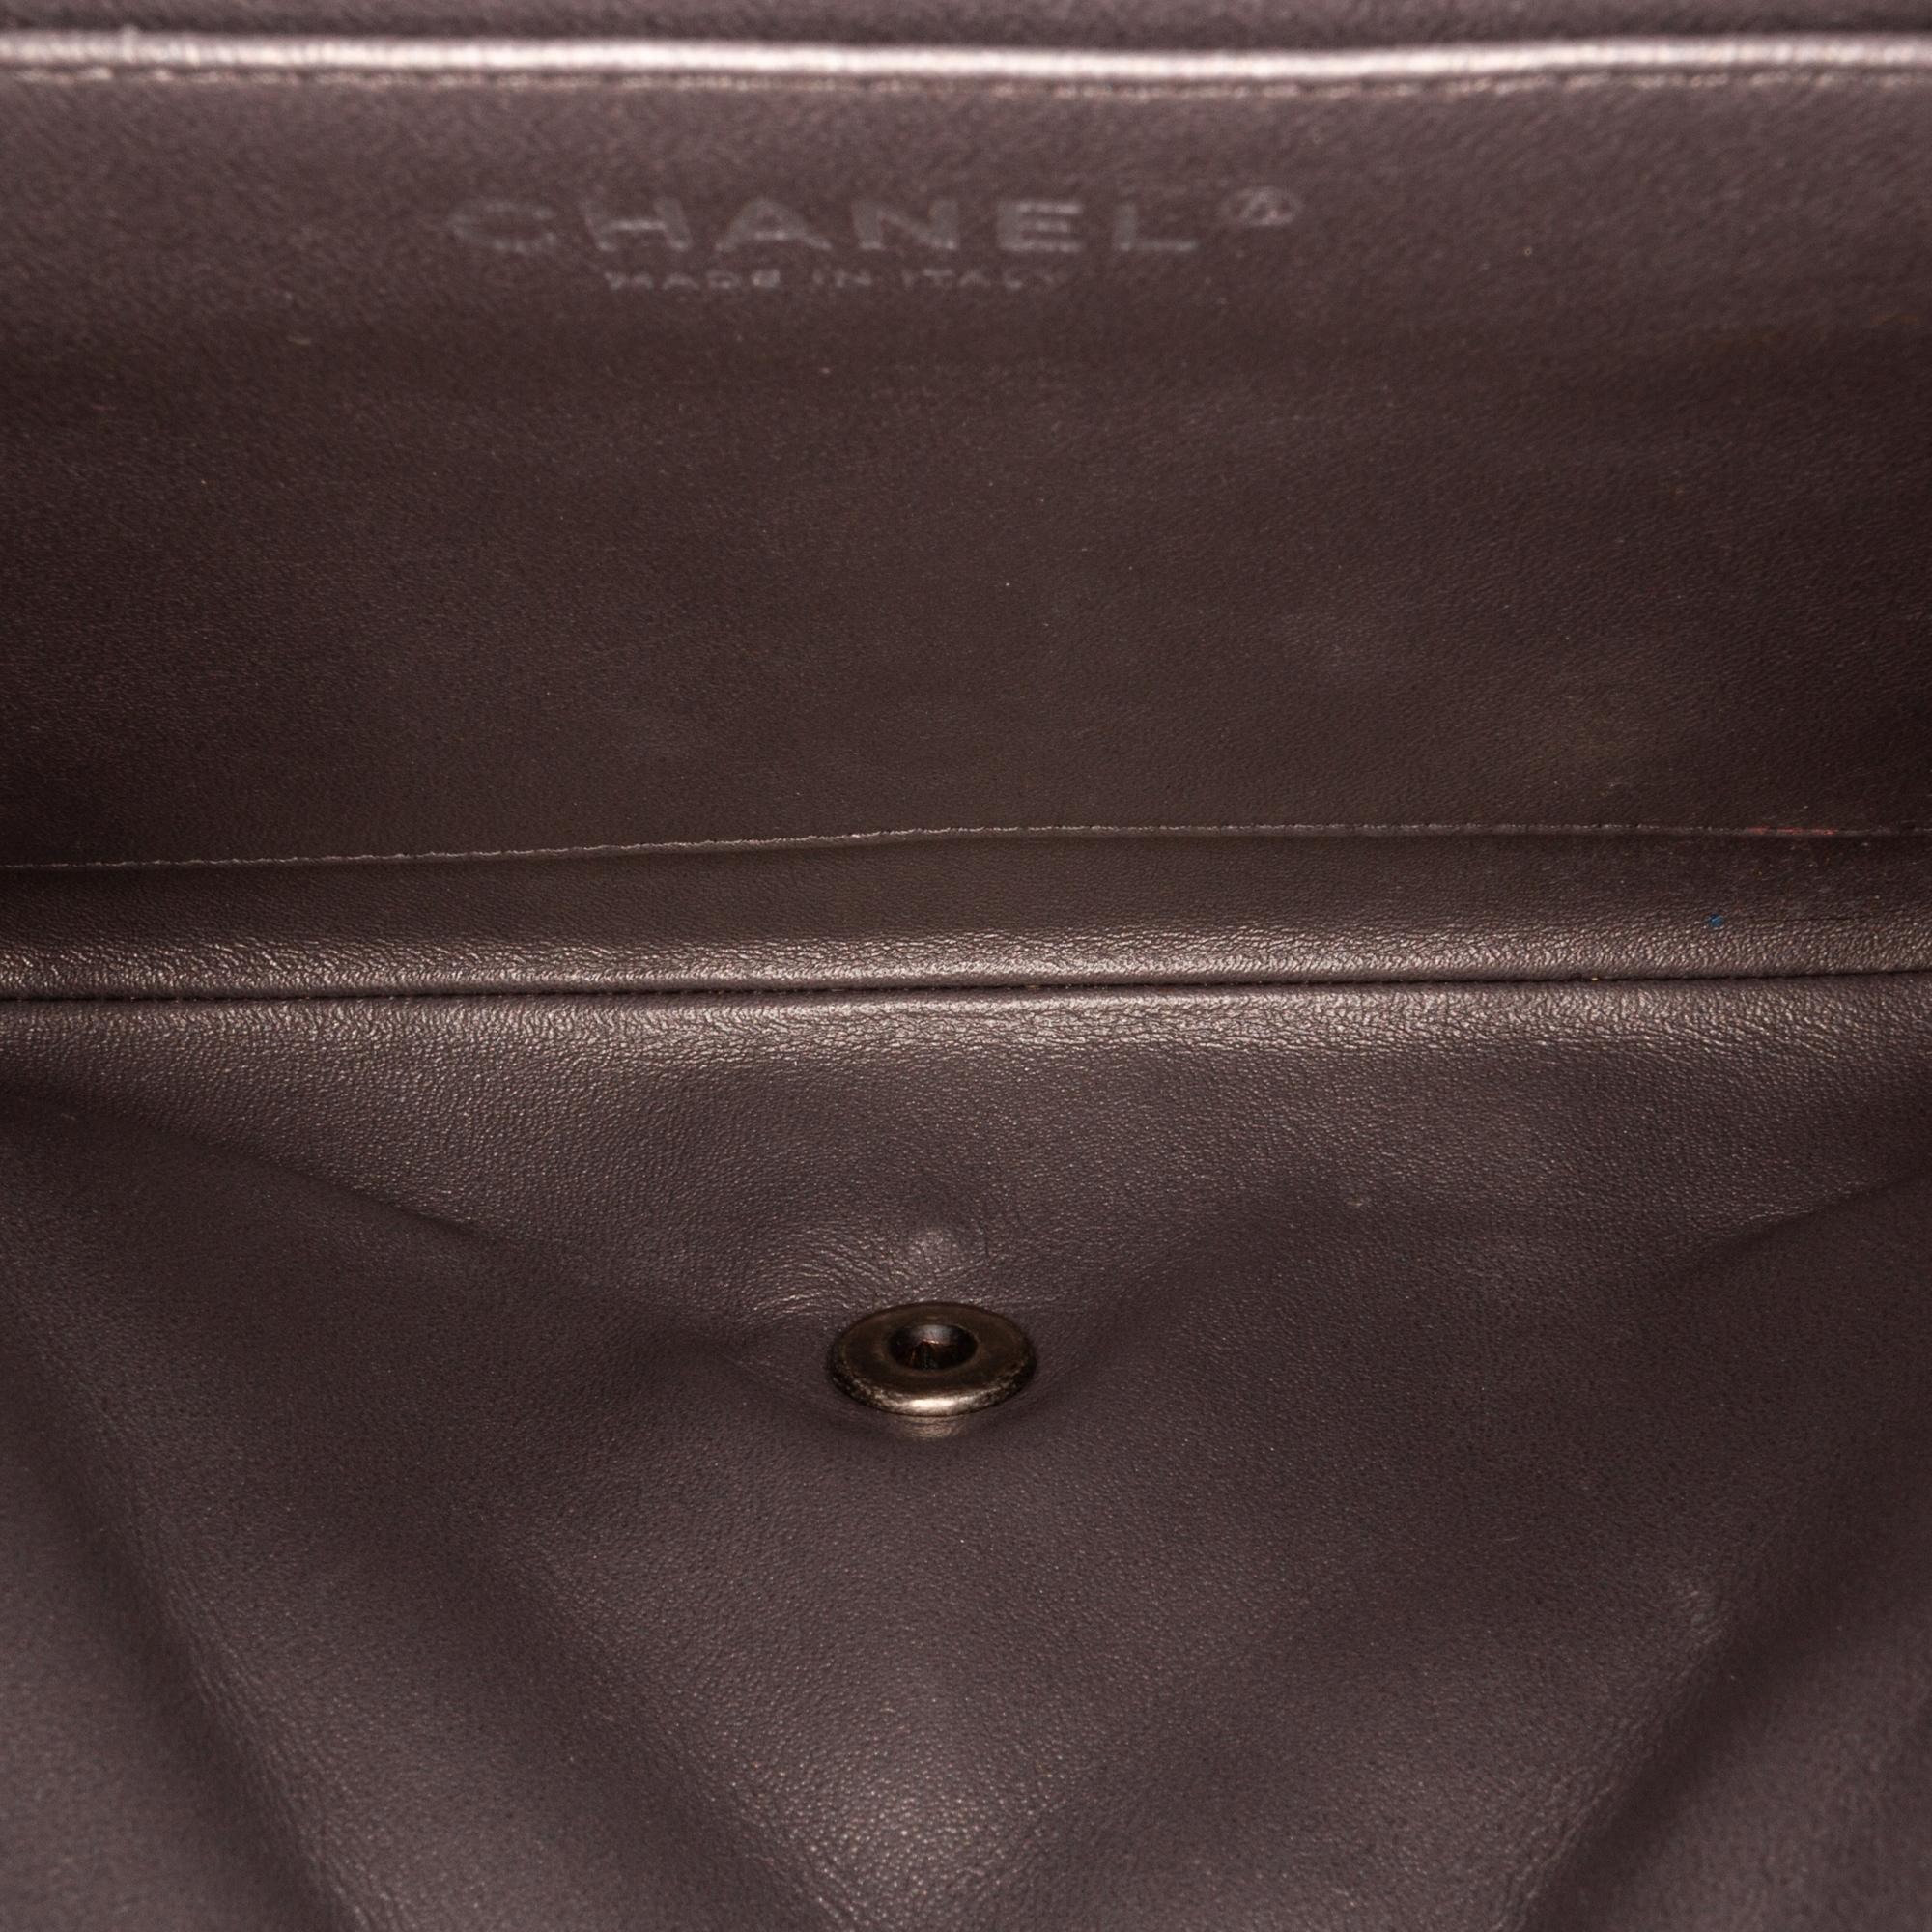 Chanel Grey CC Quilted Leather Shoulder Bag